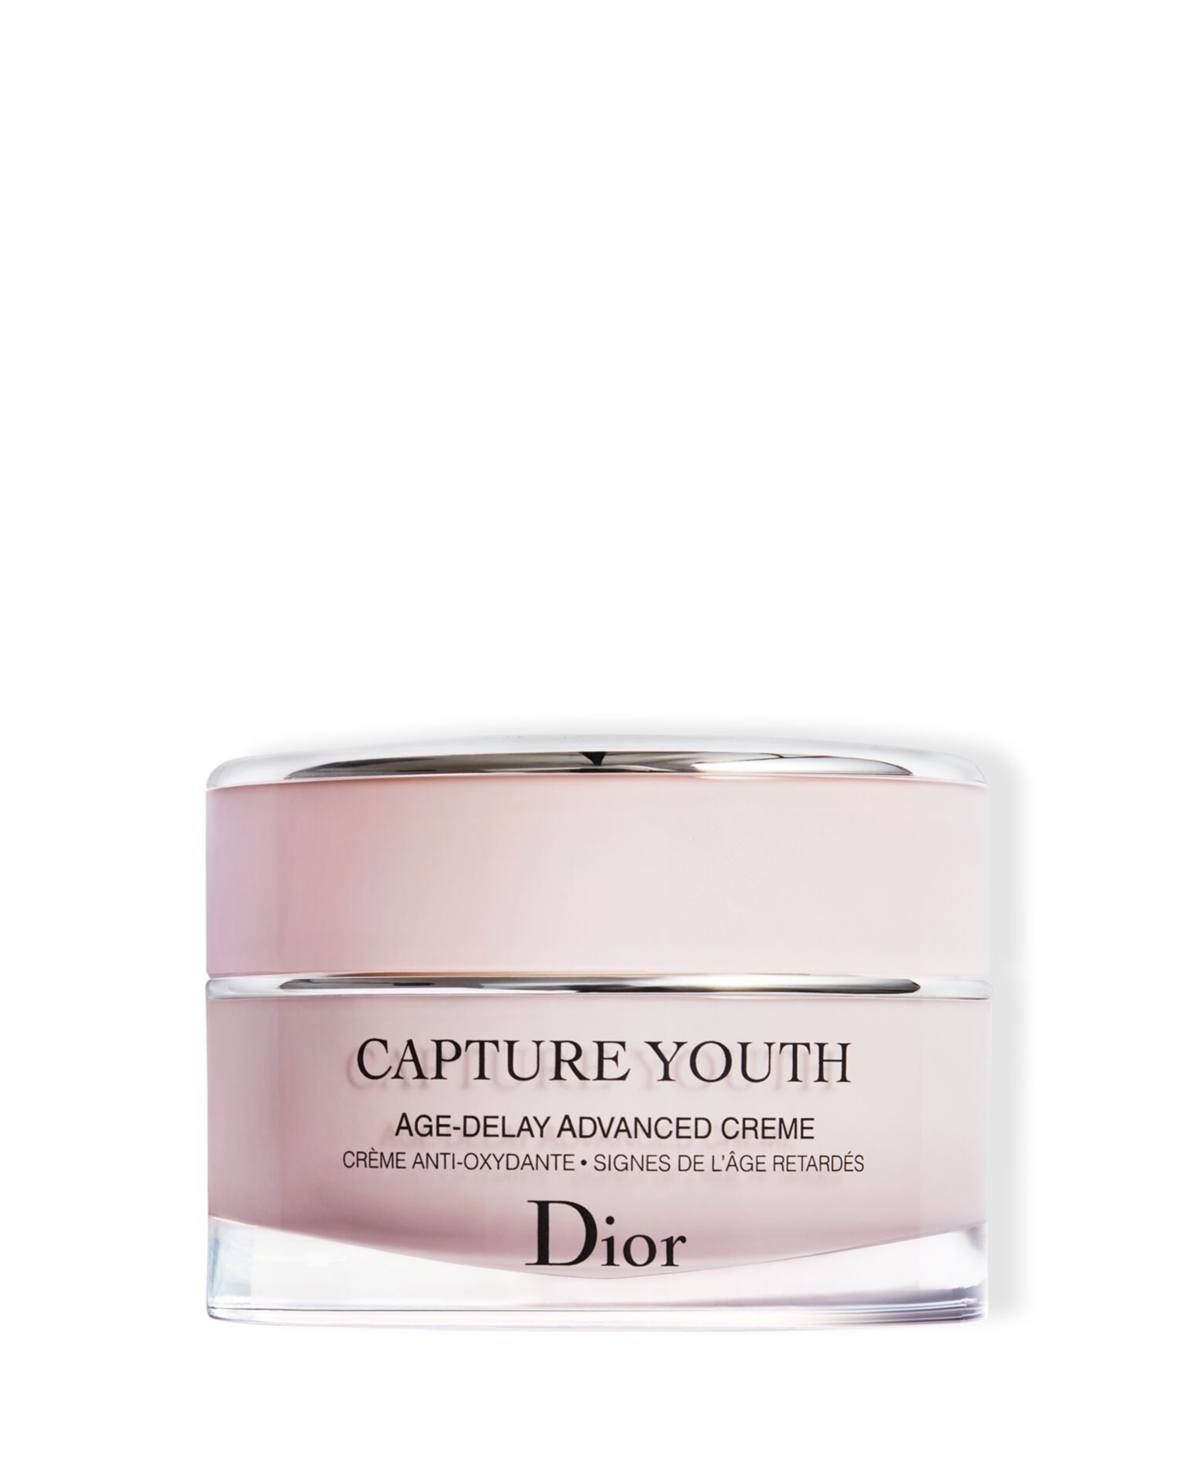 Dior Capture Youth Age-delay Advanced Creme In No Color